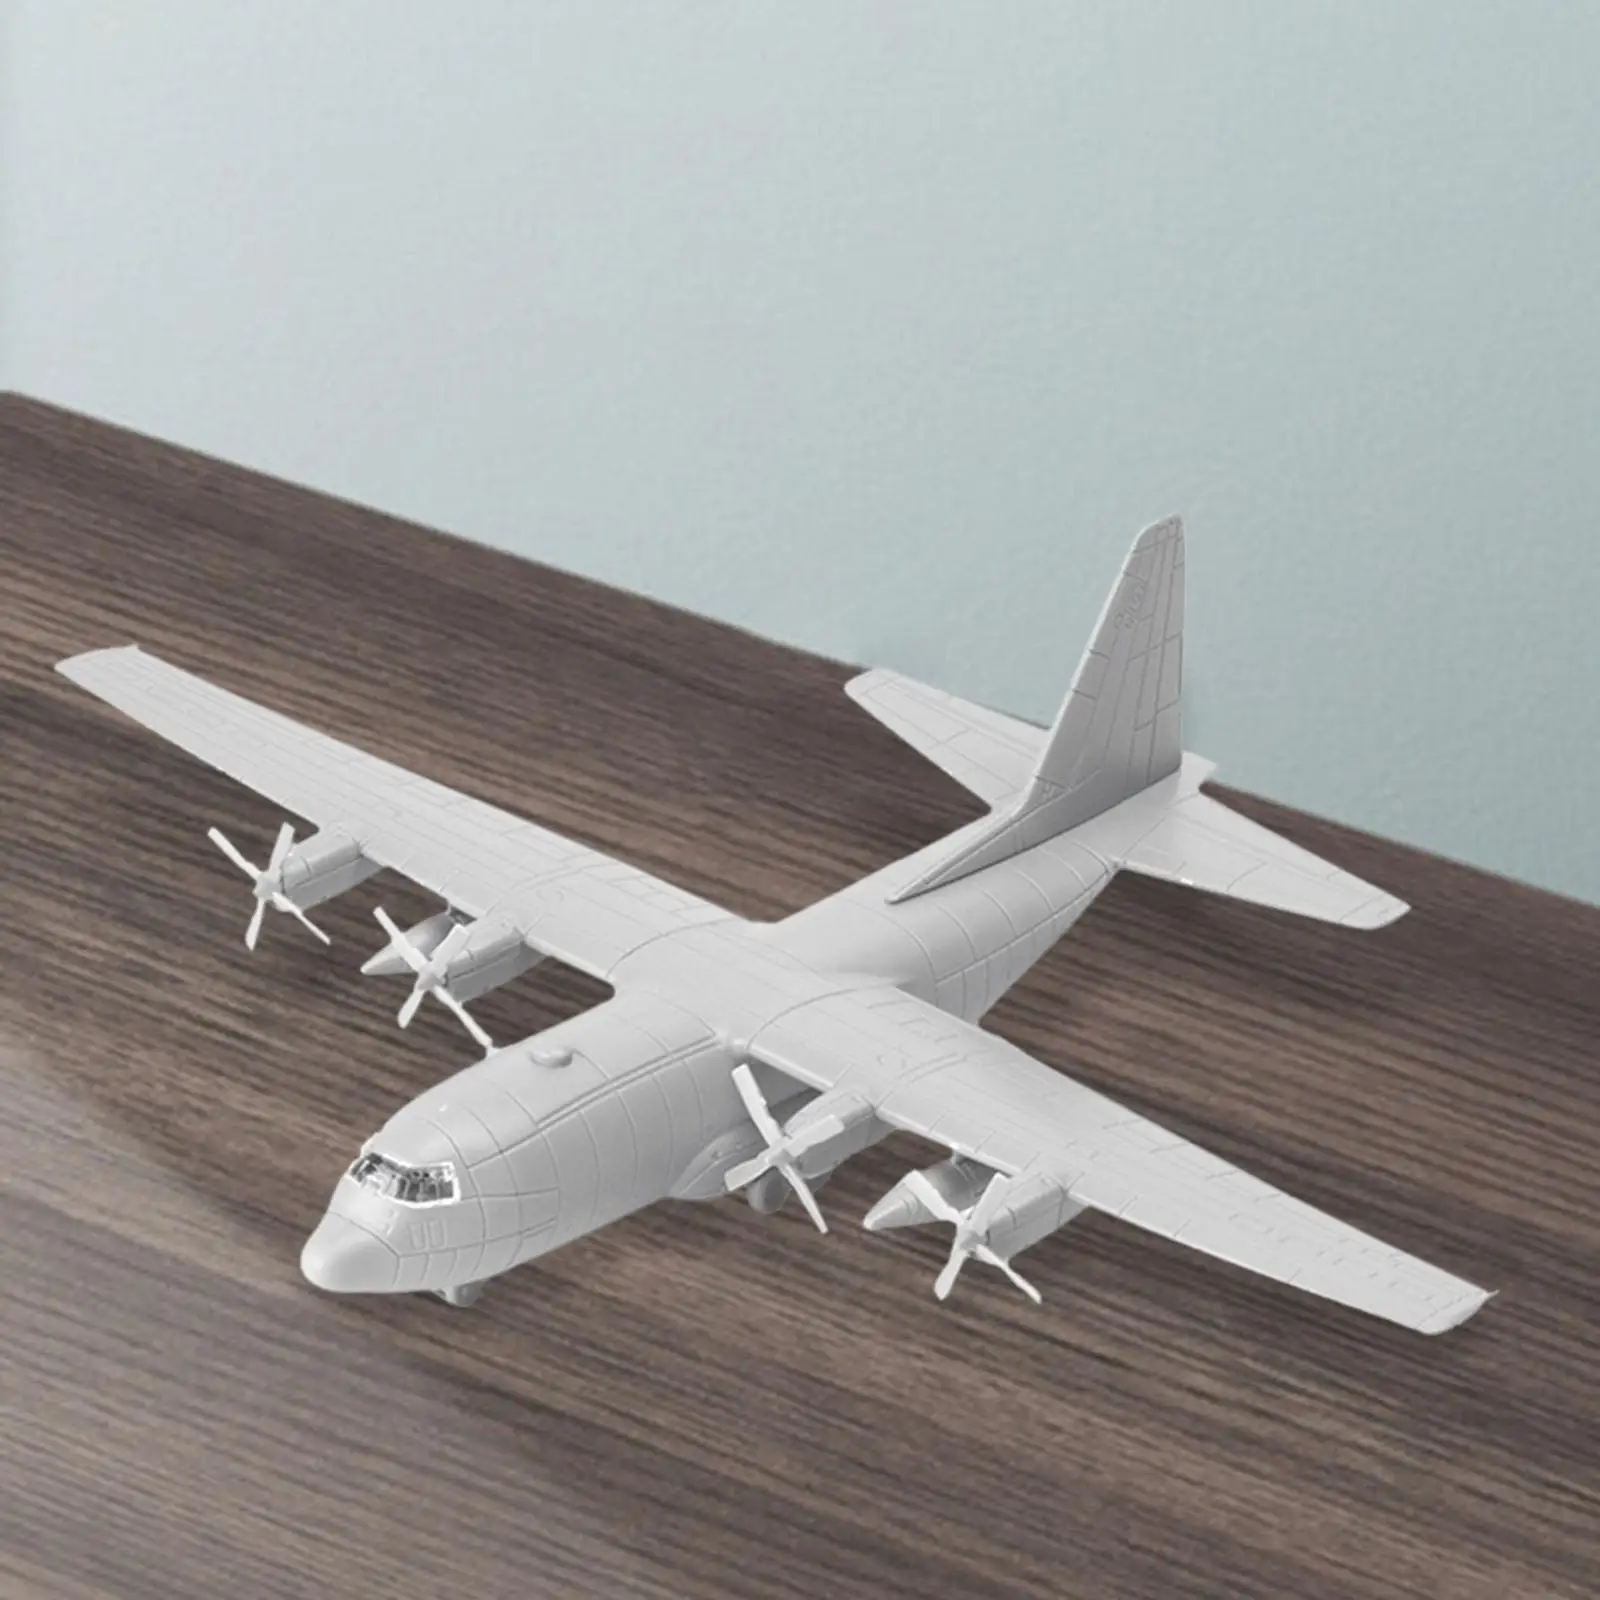 1/144 Plane Model Diecast Plane Fighter Model for Office Birthday Gifts